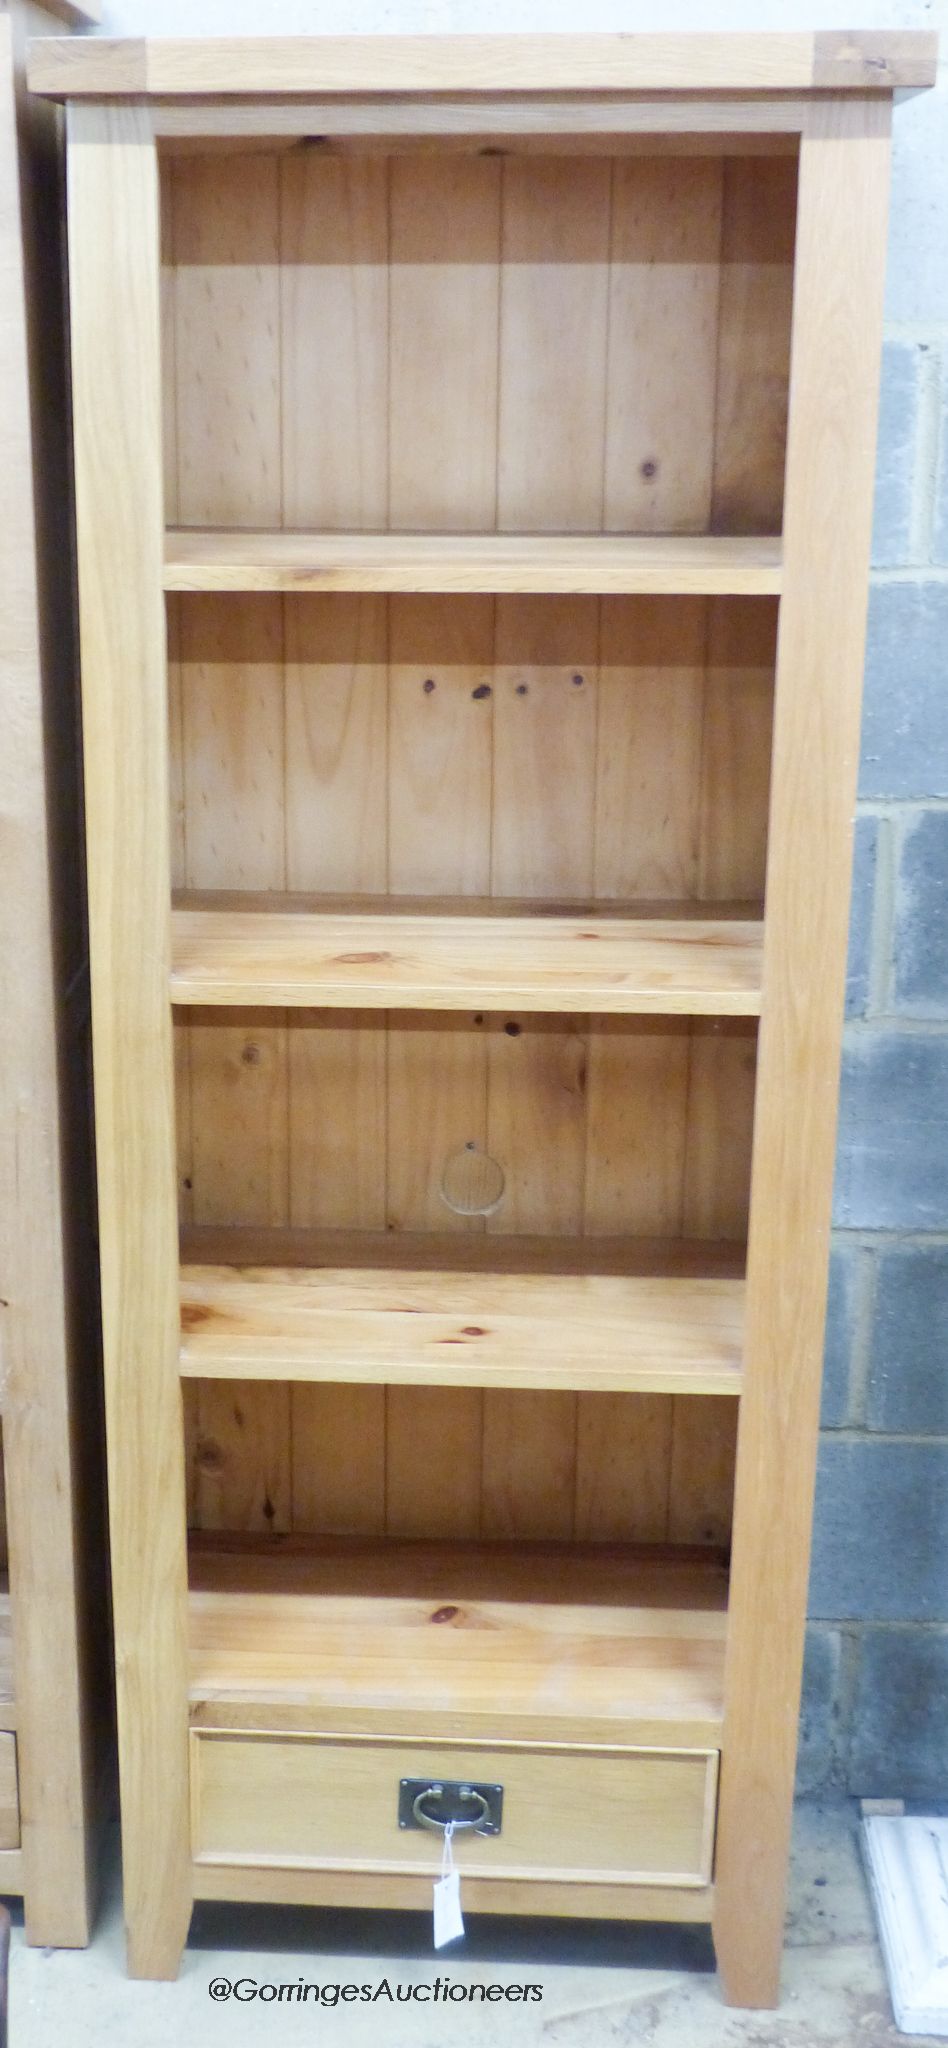 A contemporary light oak open bookcase, length 70cm, depth 34cm, height 182cm